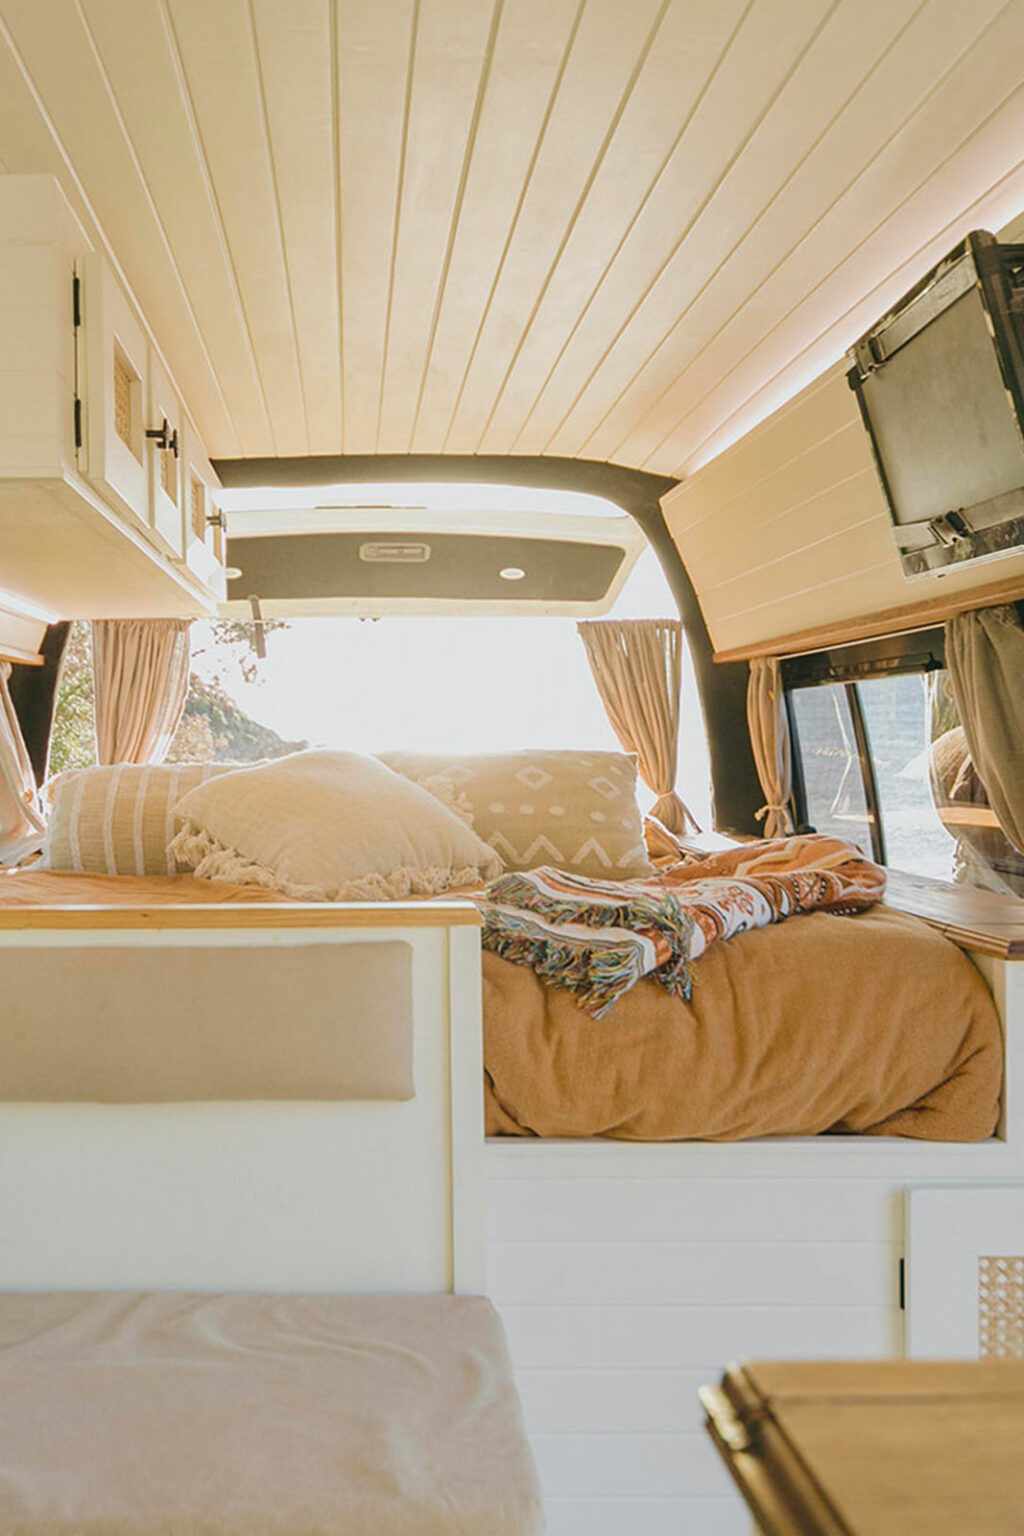 Campervan interior with bed